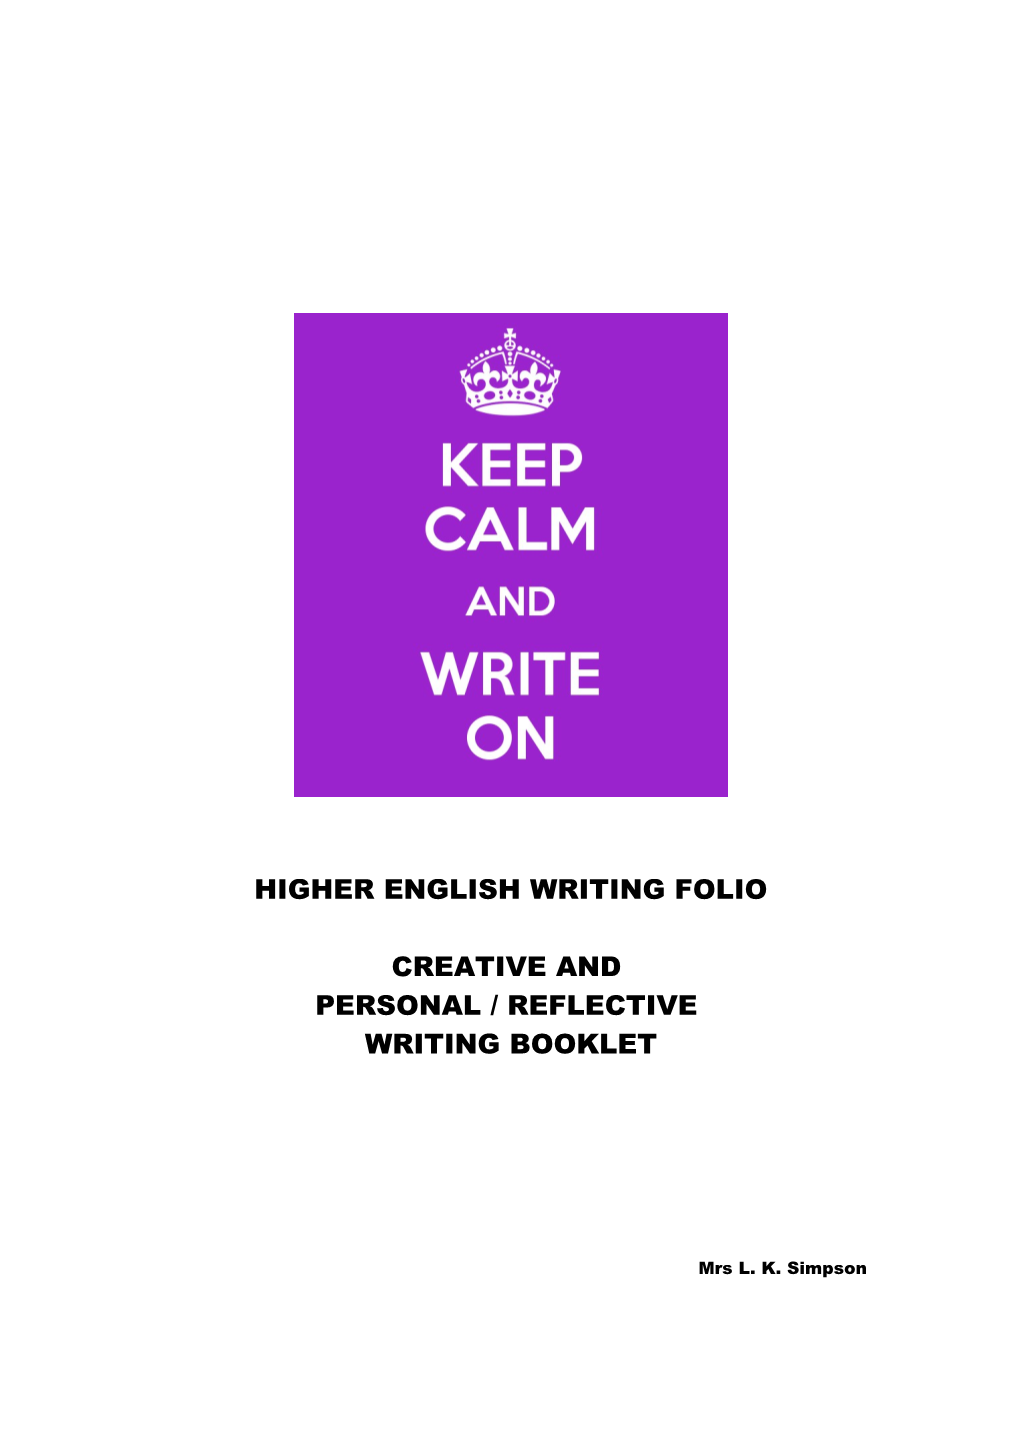 Higher English Writing Folio